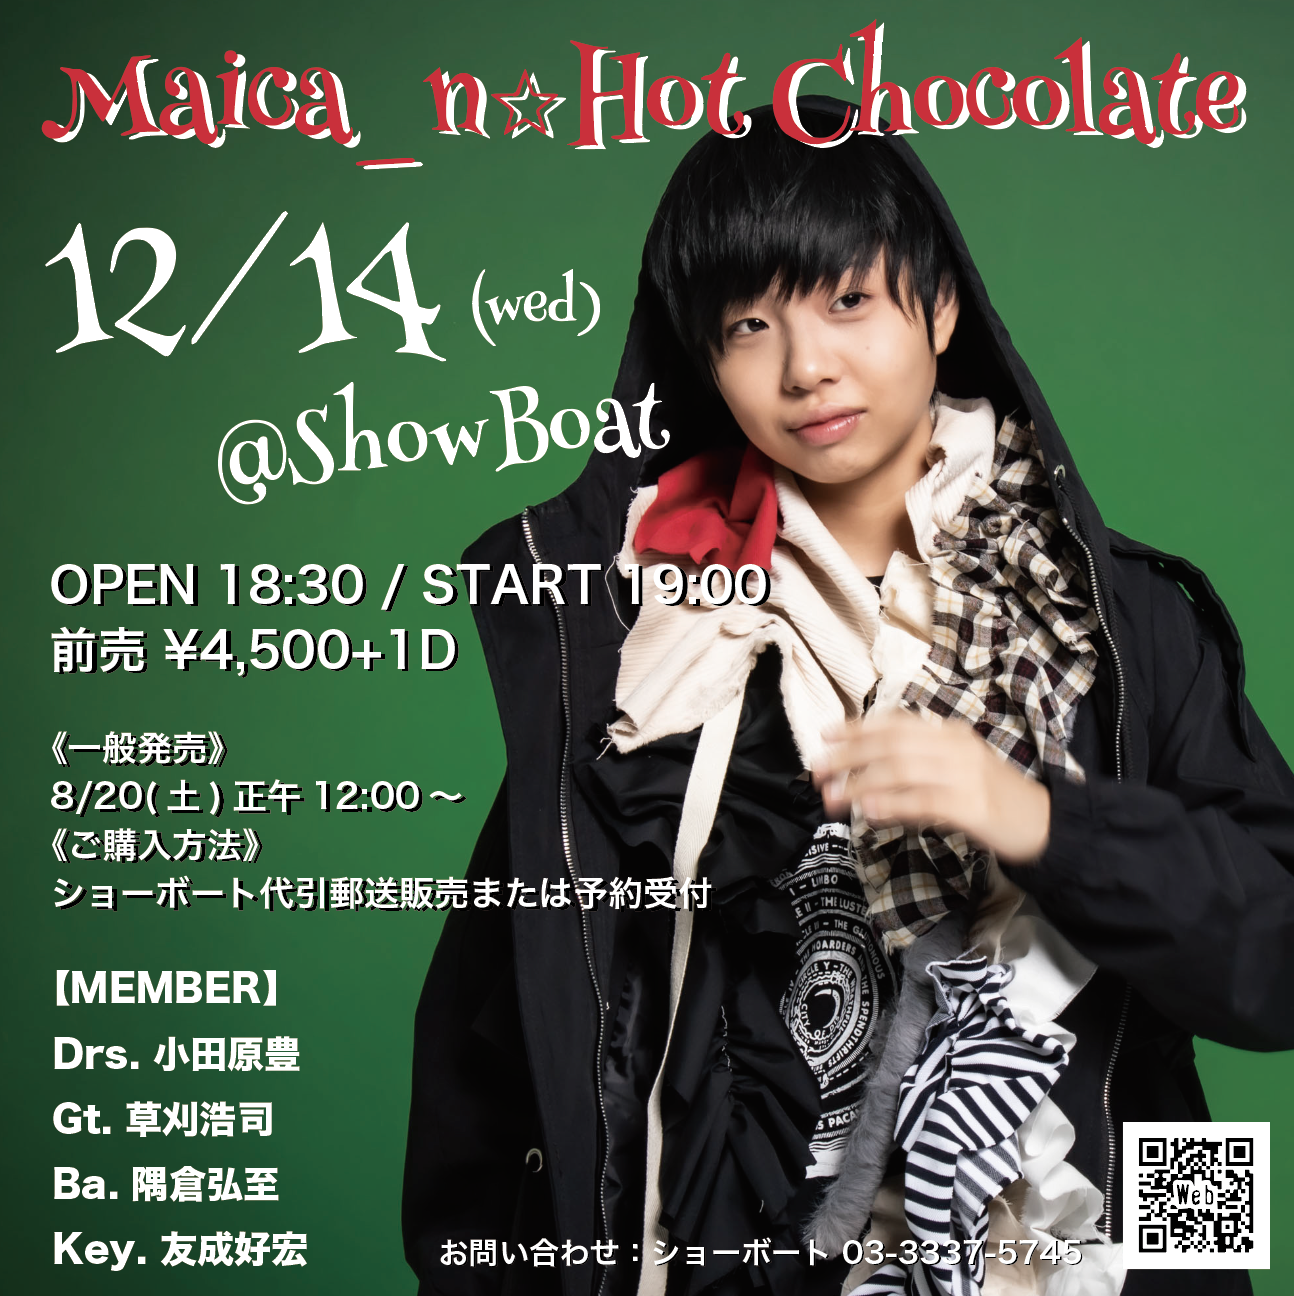 「Maica_n ★ Hot Chocolate」